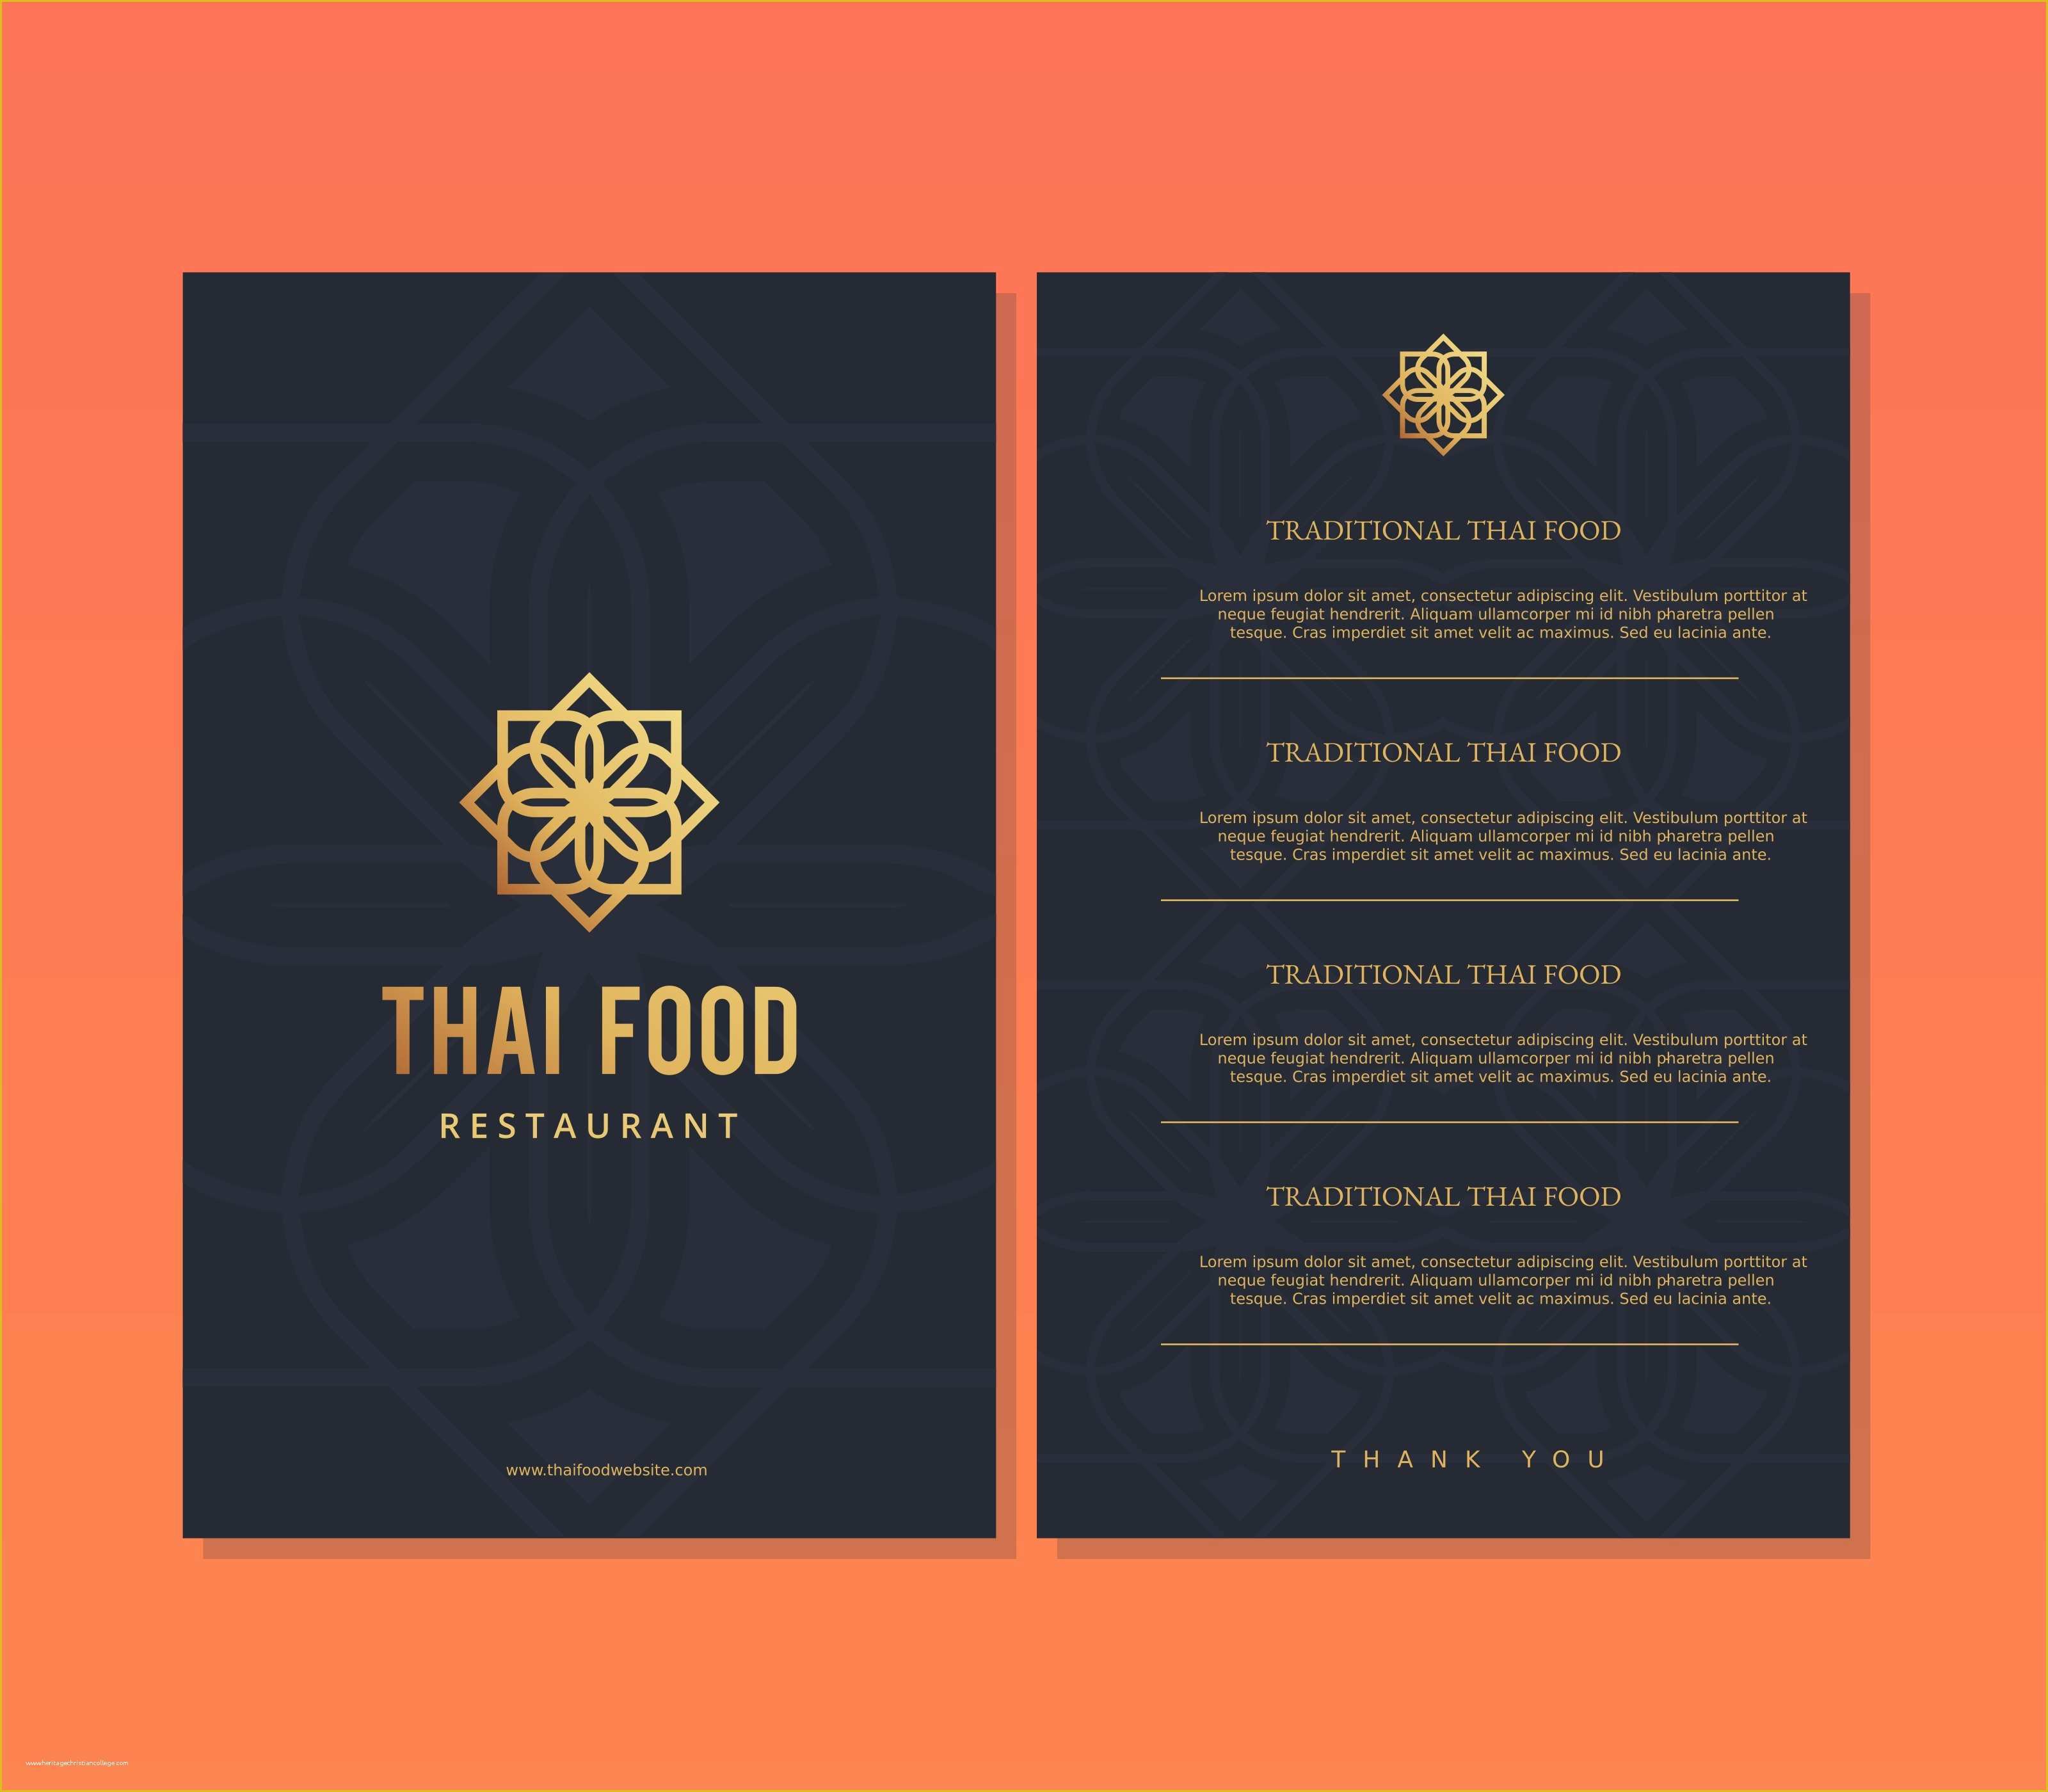 Thai Restaurant Menu Templates Free Of Thai Food Restaurant Menu Template Download Free Vector